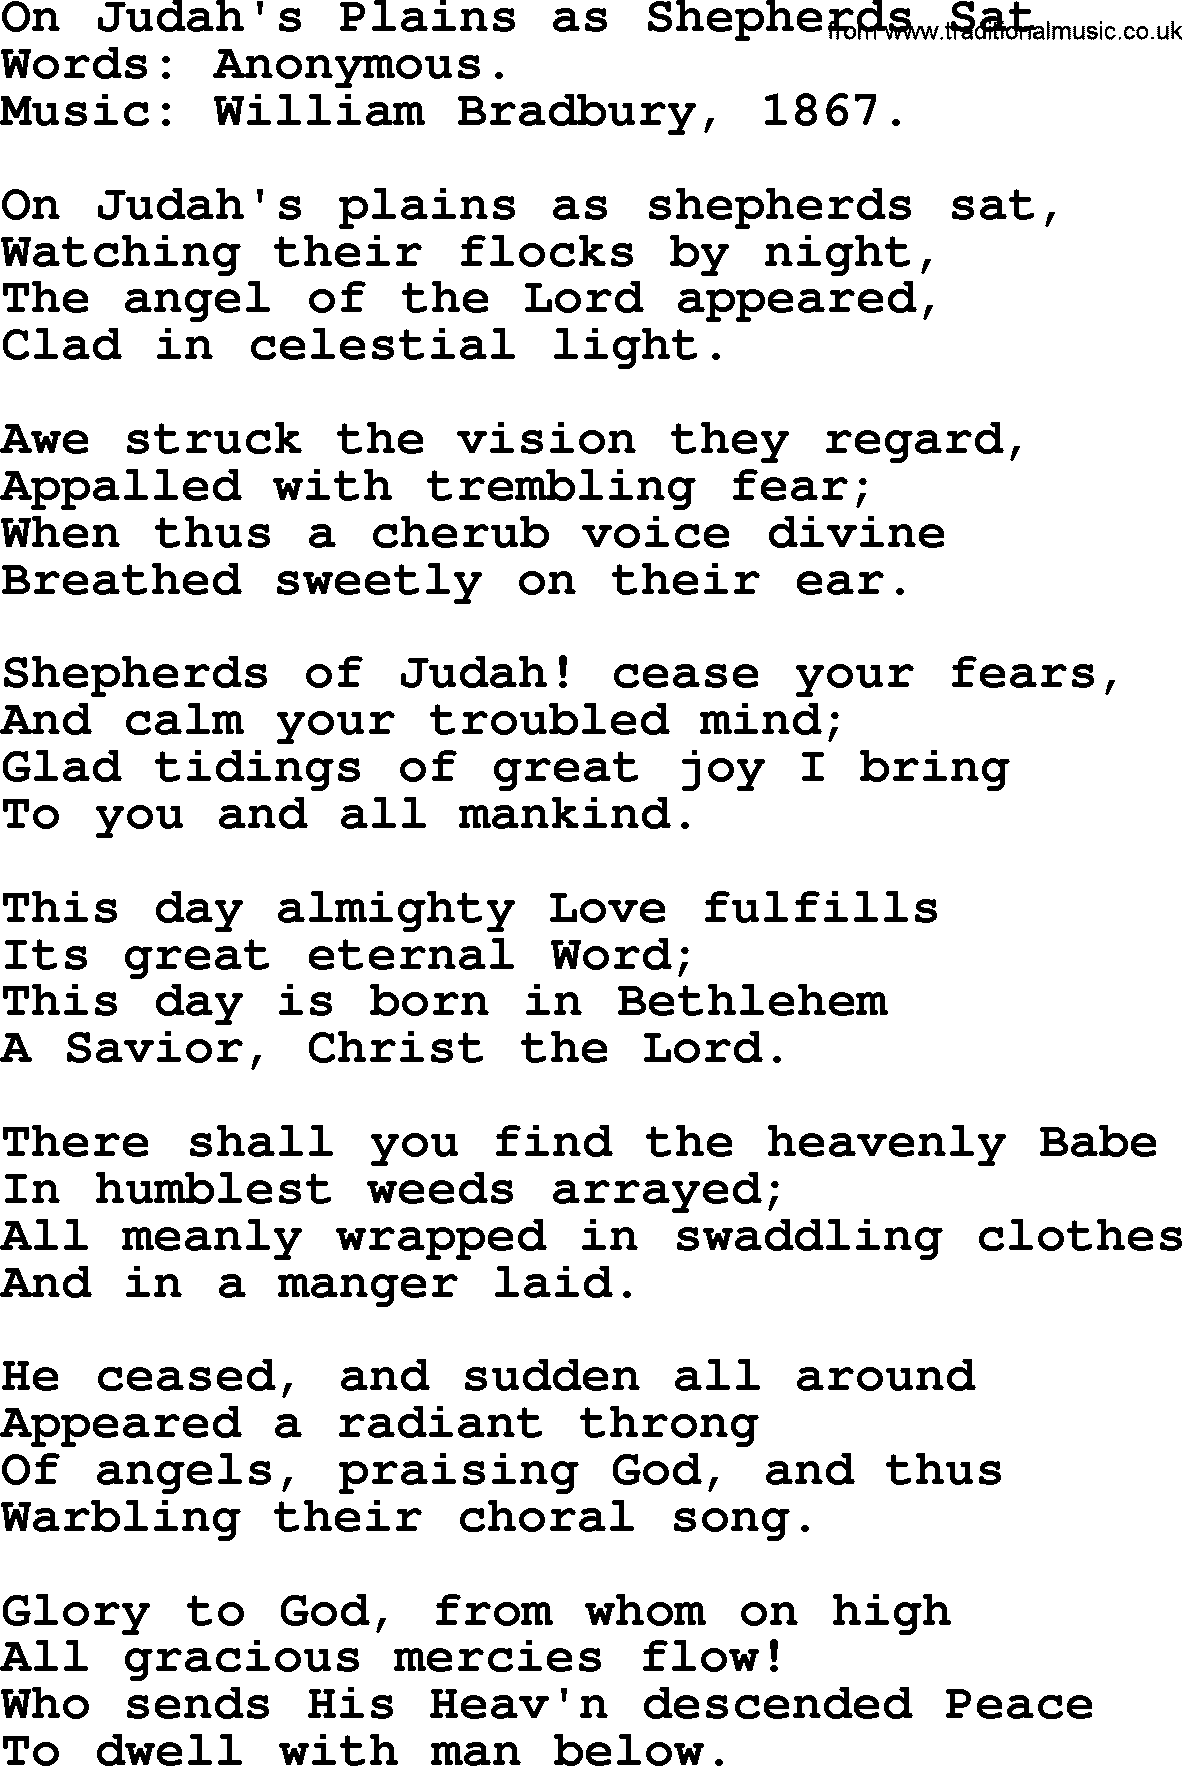 Christmas Hymns, Carols and Songs, title: On Judah's Plains As Shepherds Sat, lyrics with PDF